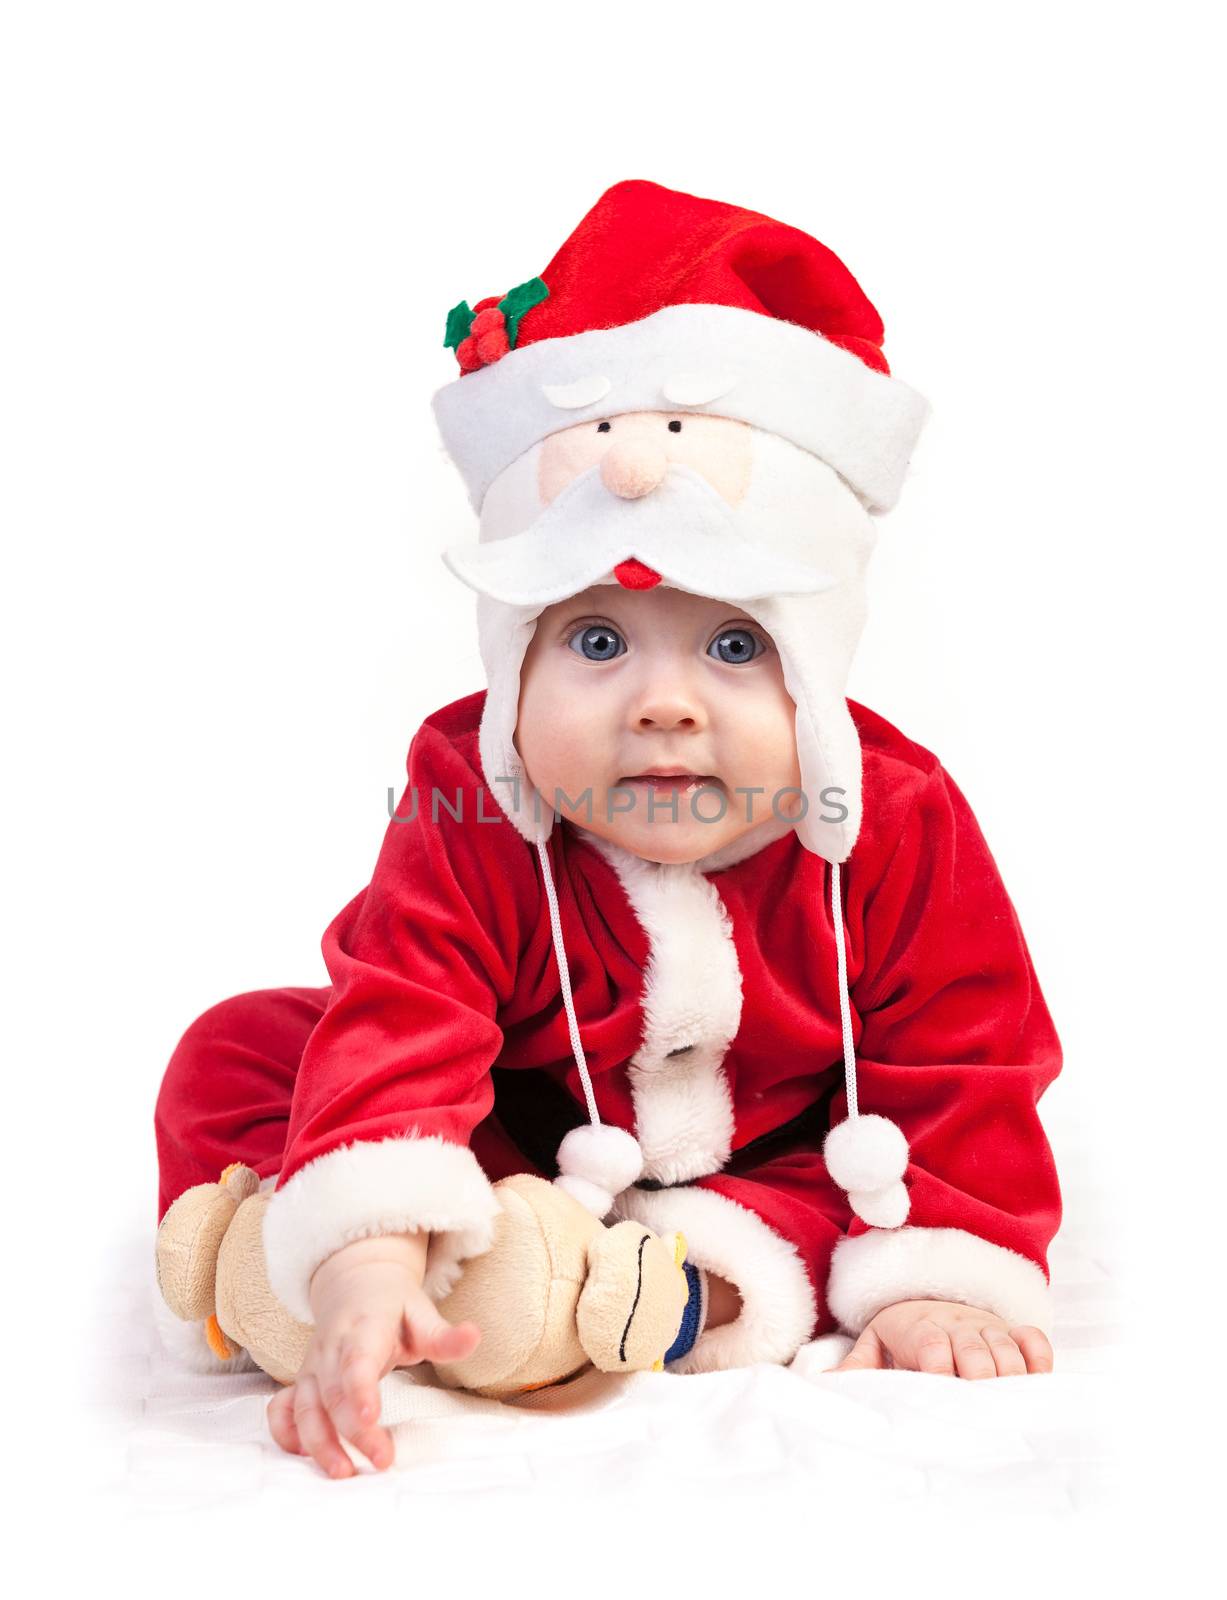 Cute little boy in Santa costume over white background